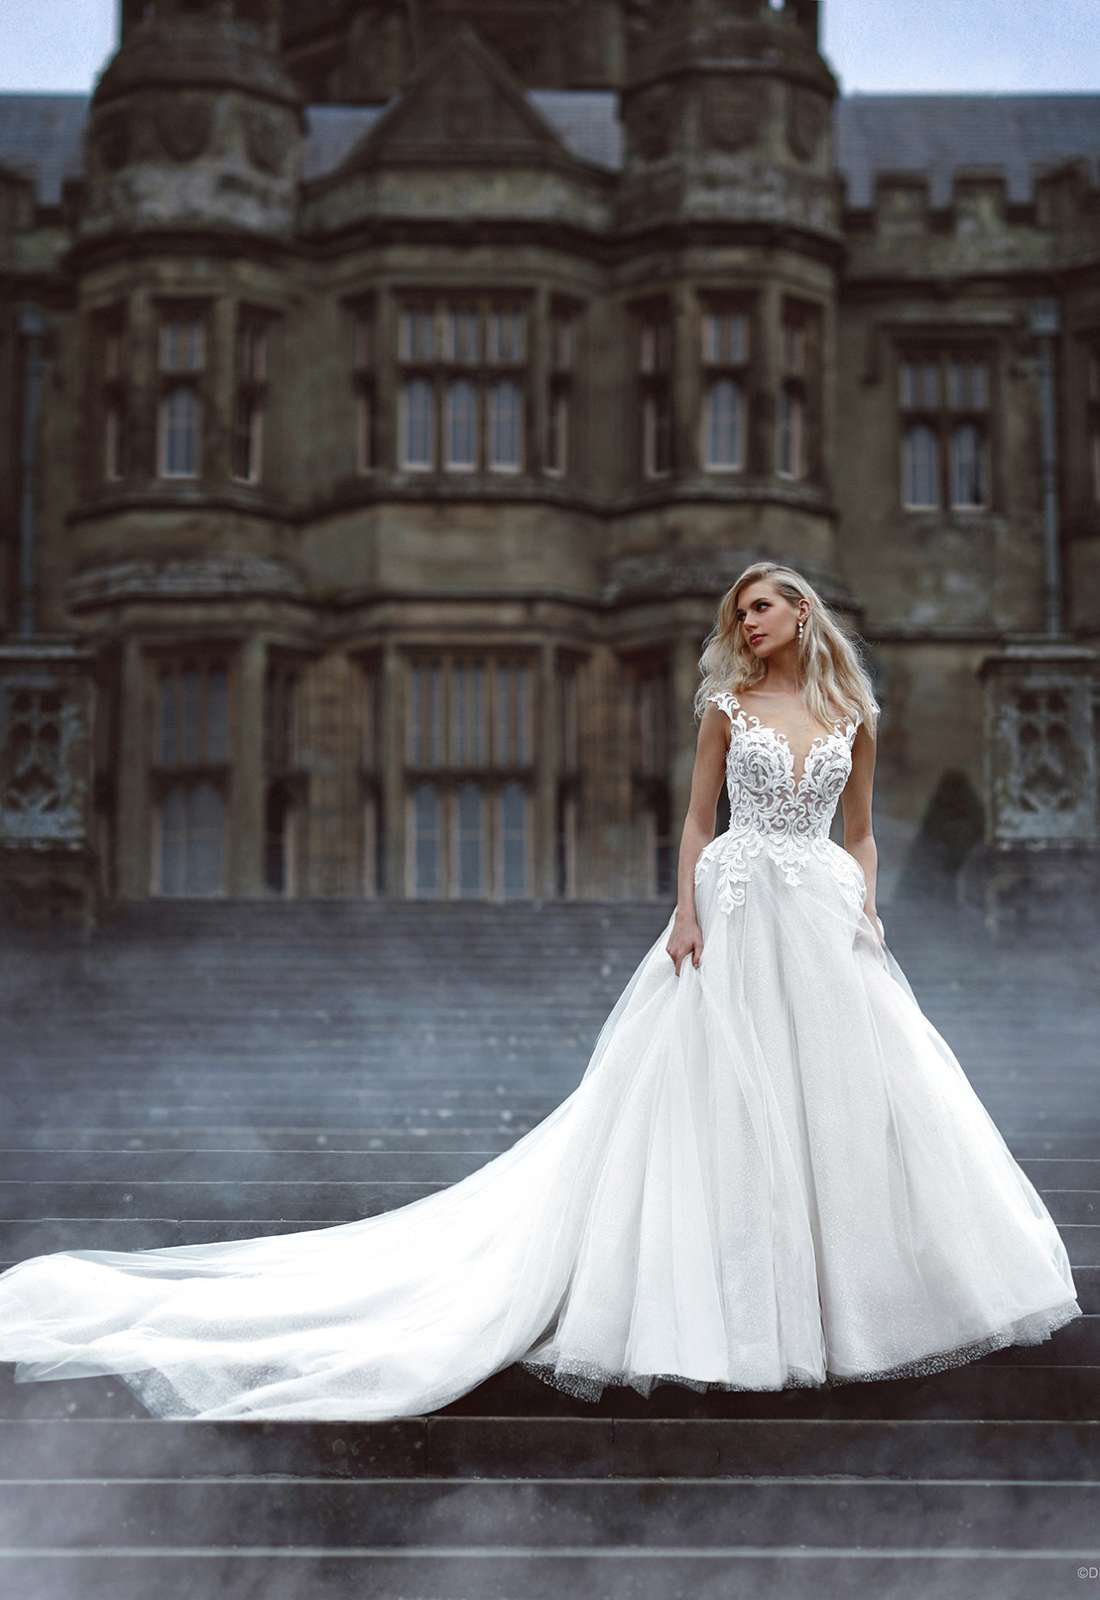 Allure Cinderella Disney Fairy Tale Wedding Dress at love it at stellas bridal shop in westminster md